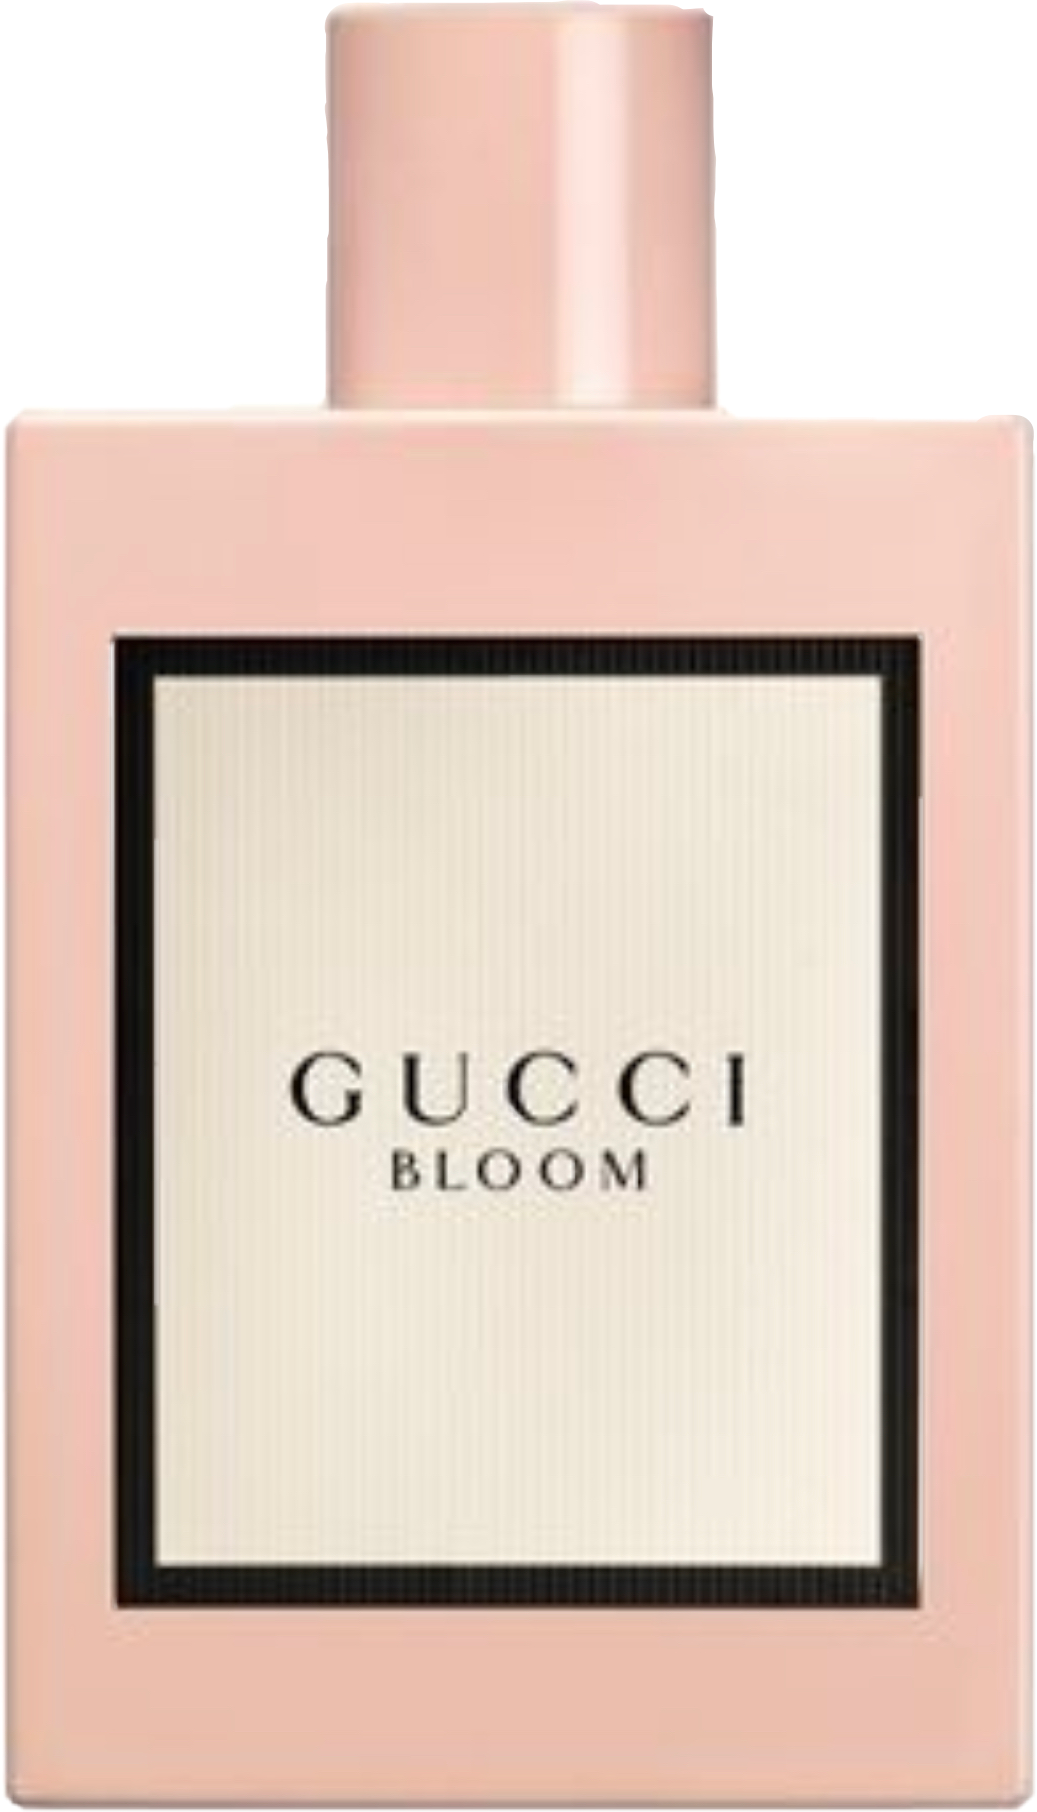 Gucci Bloom Guccibloom Perfume Sticker By P0llyyy